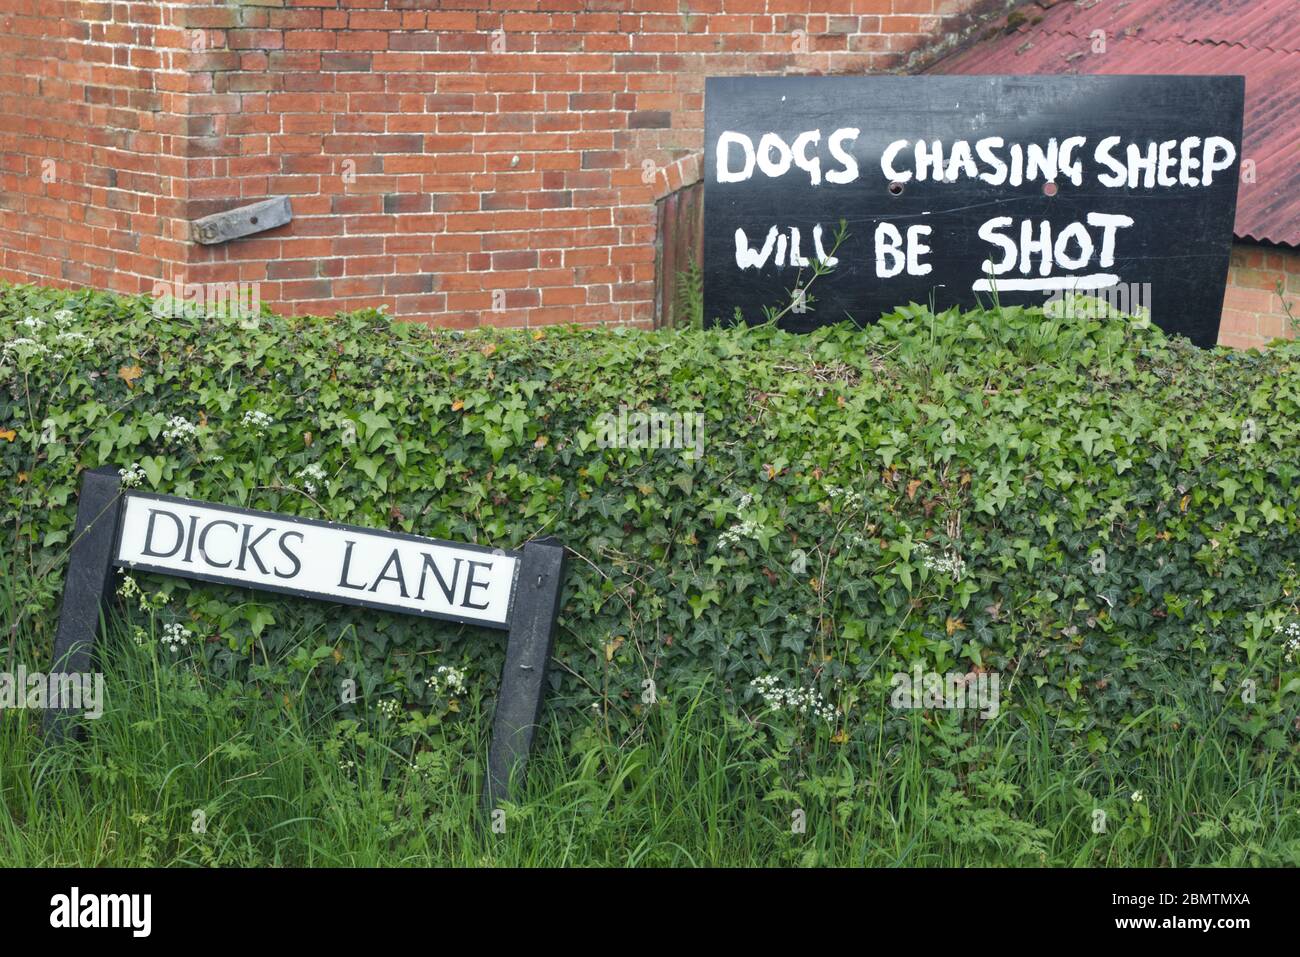 dicks lane, dogs chasing sheep will be shot sign Stock Photo